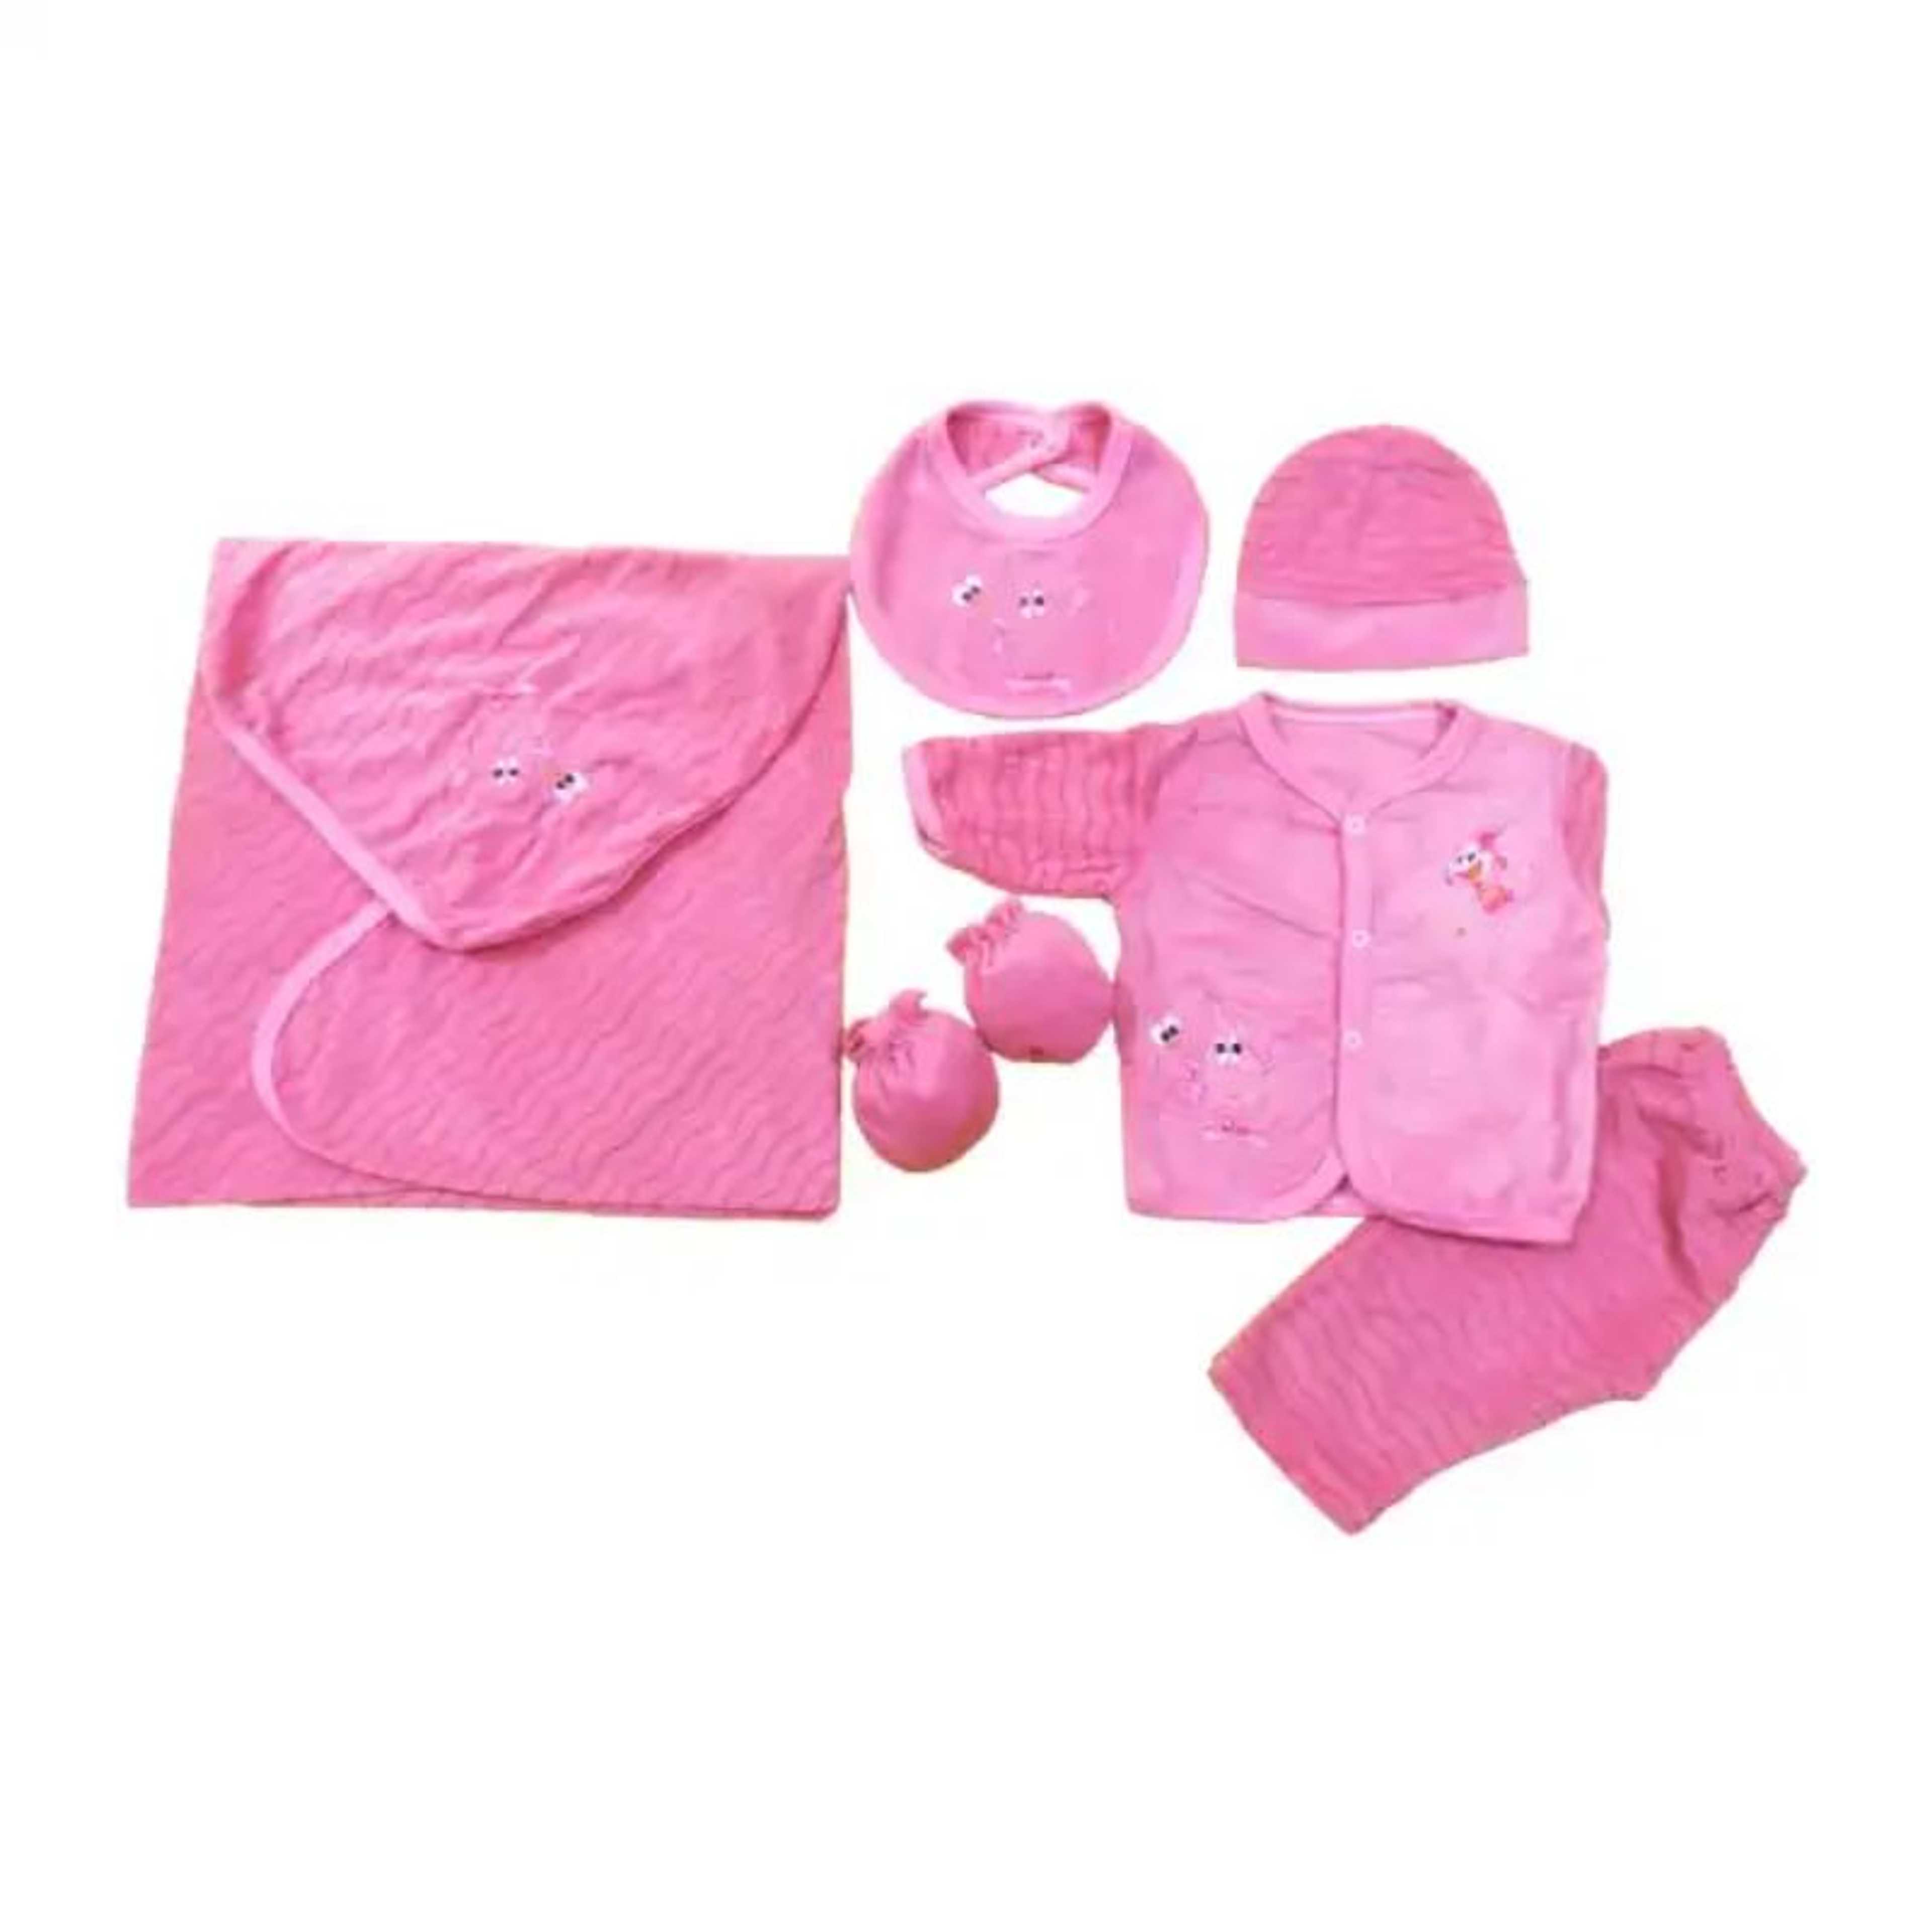 The minion premium baby clothing set
